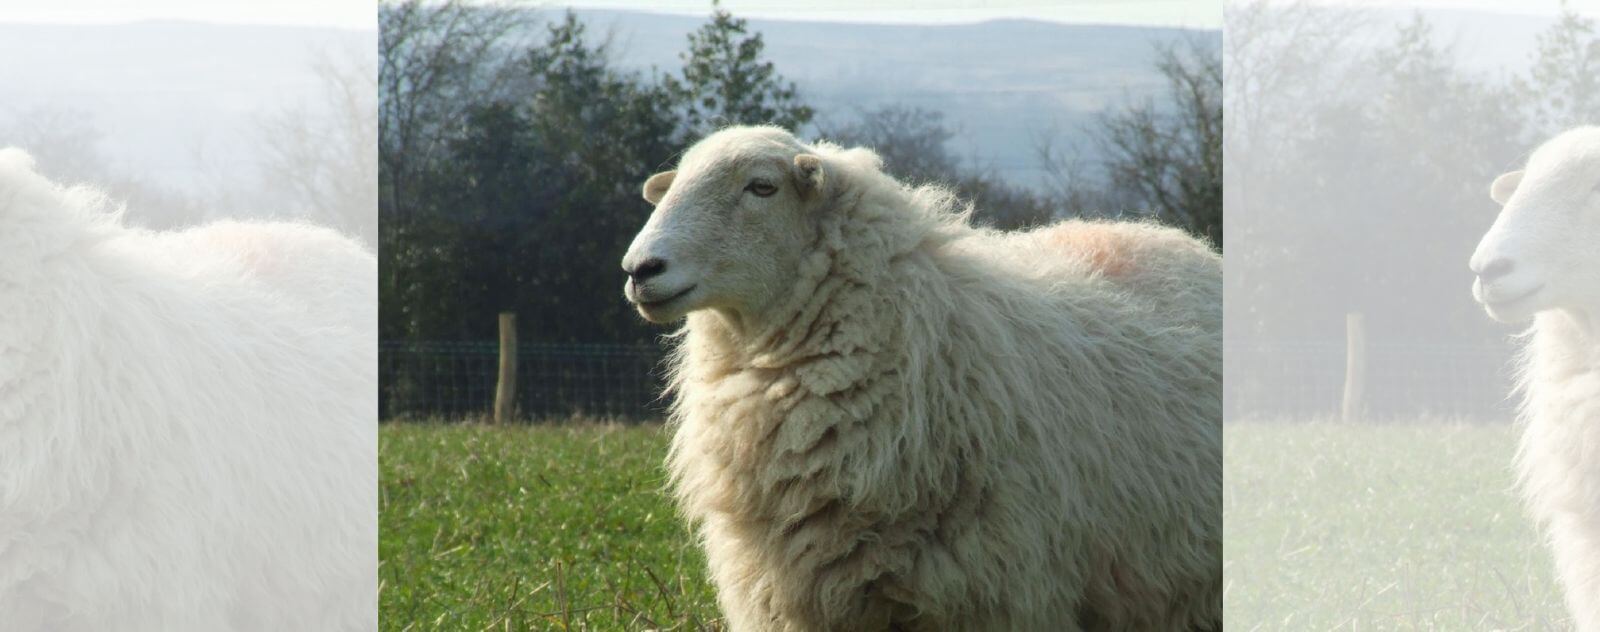 Sheep Full of Wool